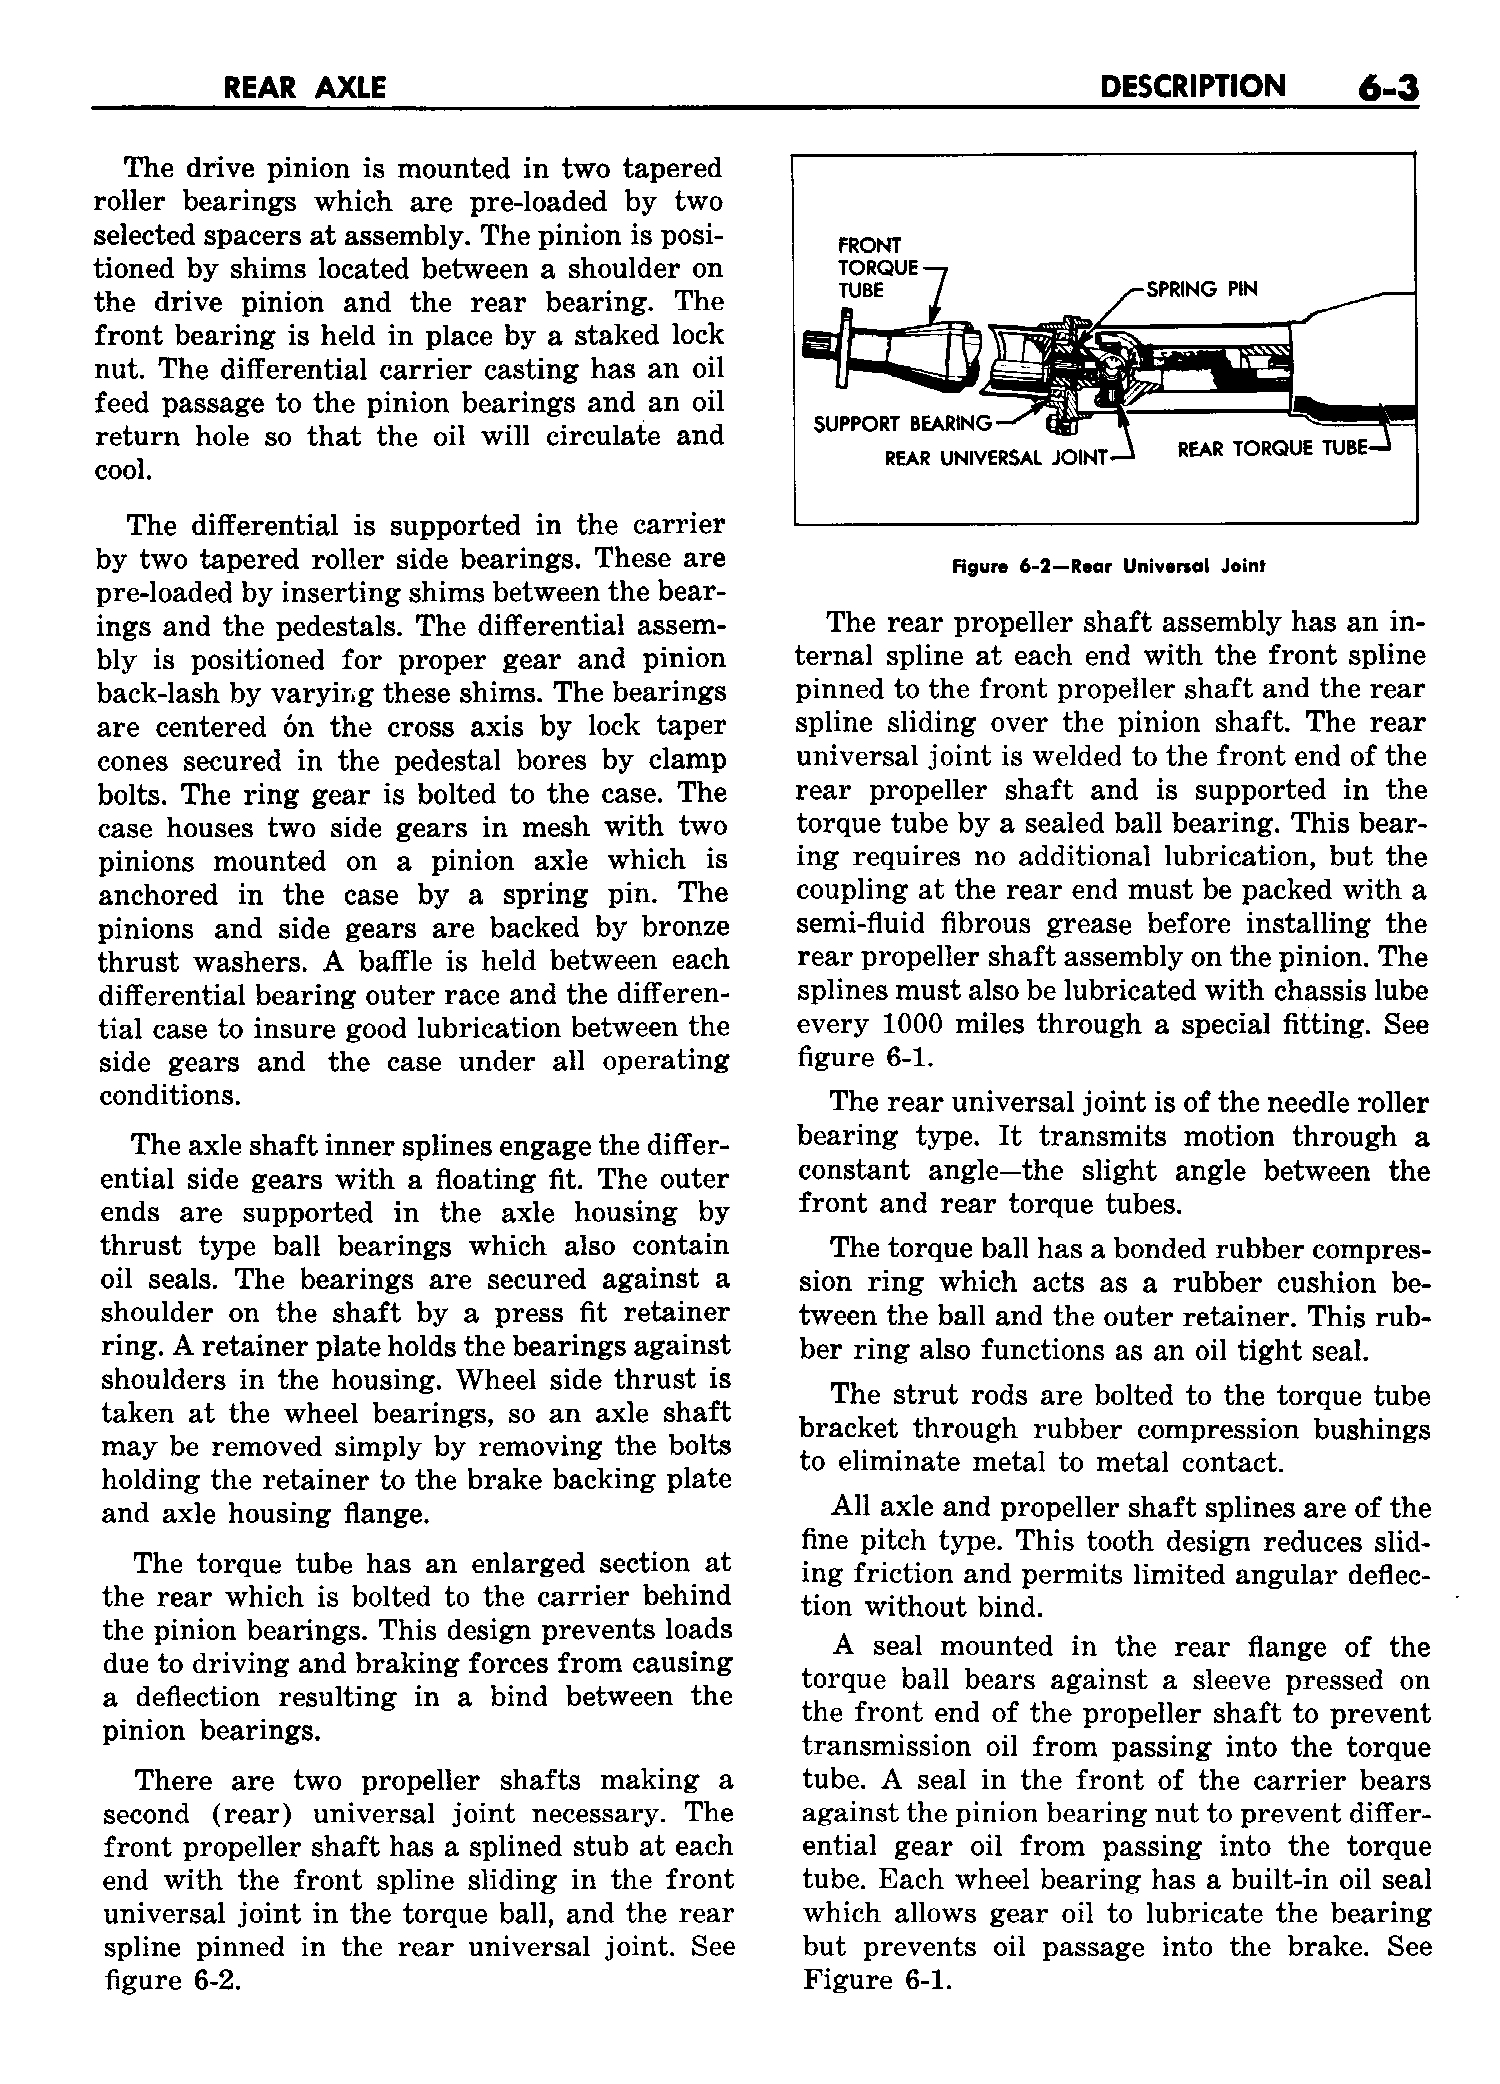 n_07 1958 Buick Shop Manual - Rear Axle_3.jpg